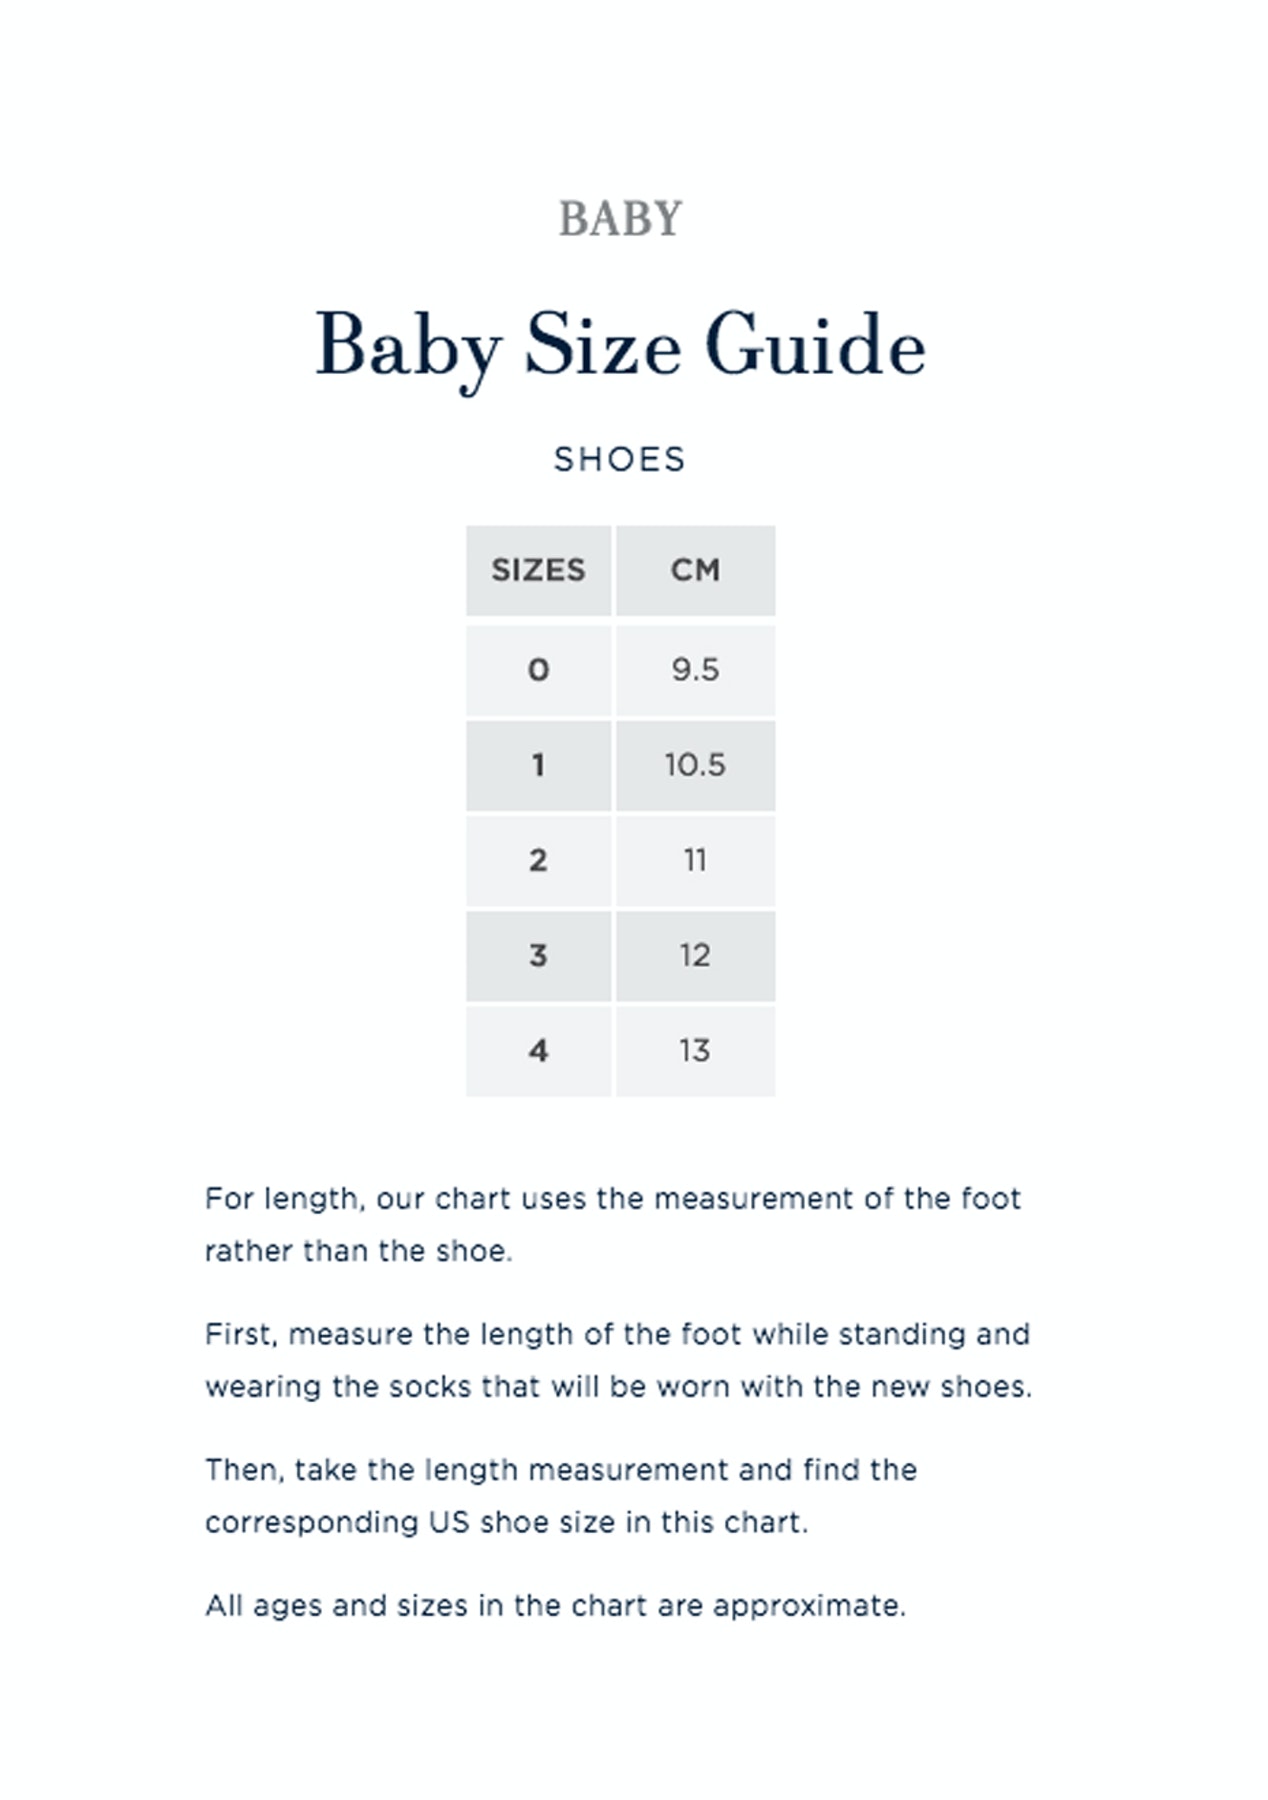 polo shoes size chart